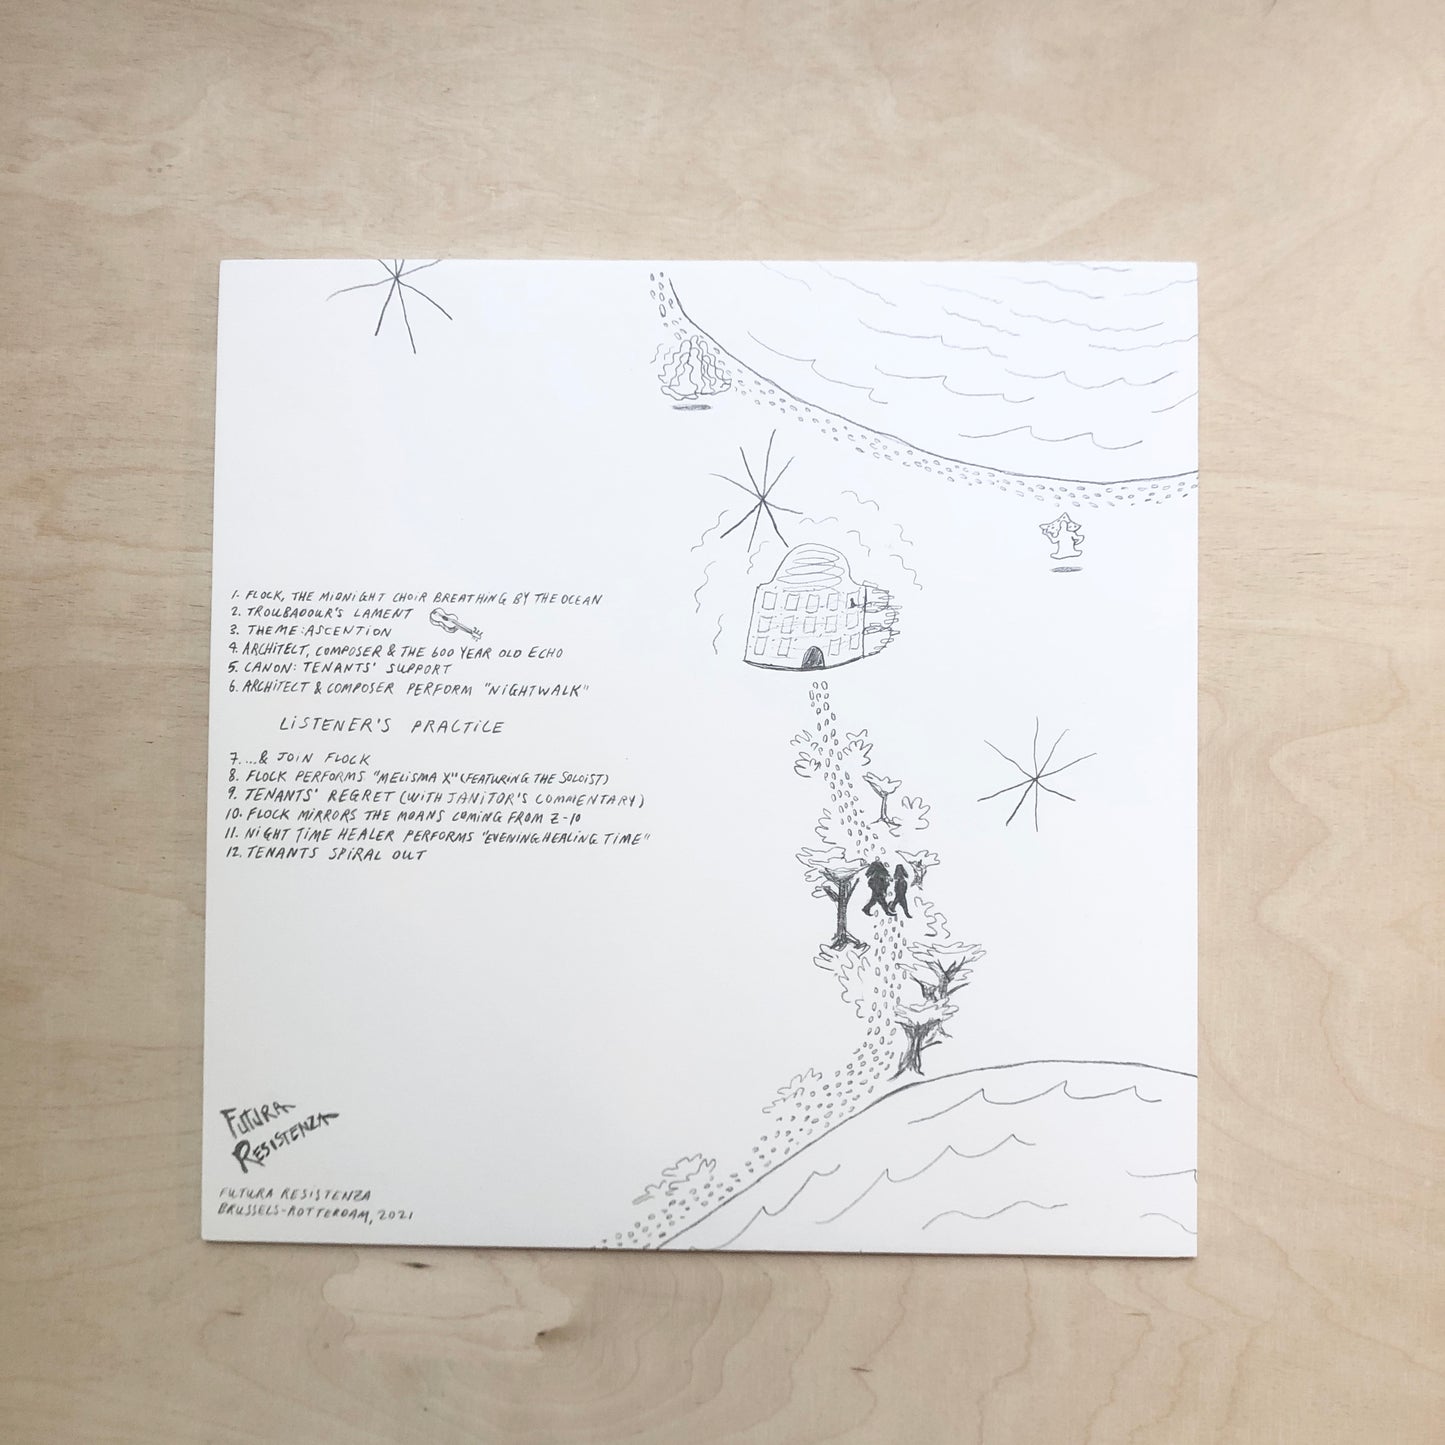 Bergur Anderson - Night Time Transmissions LP